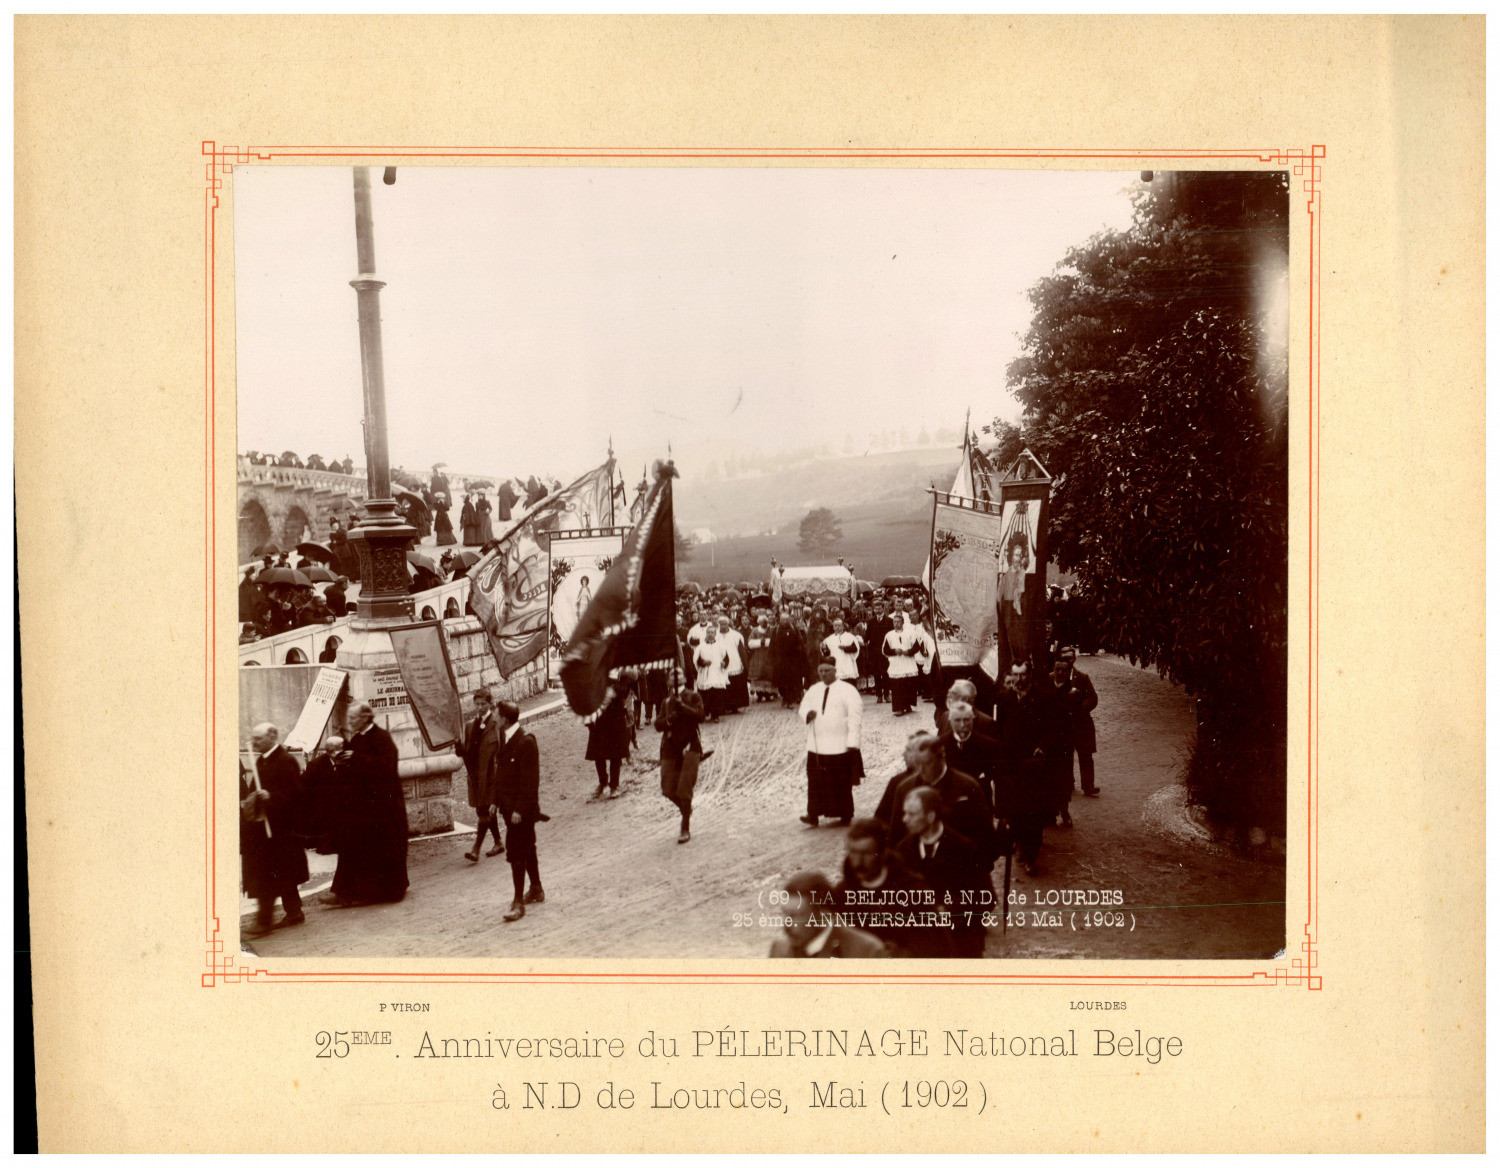 Belgian & ND Lourdes National Pilgrimage Anniversary, May (1902) Vintage pr